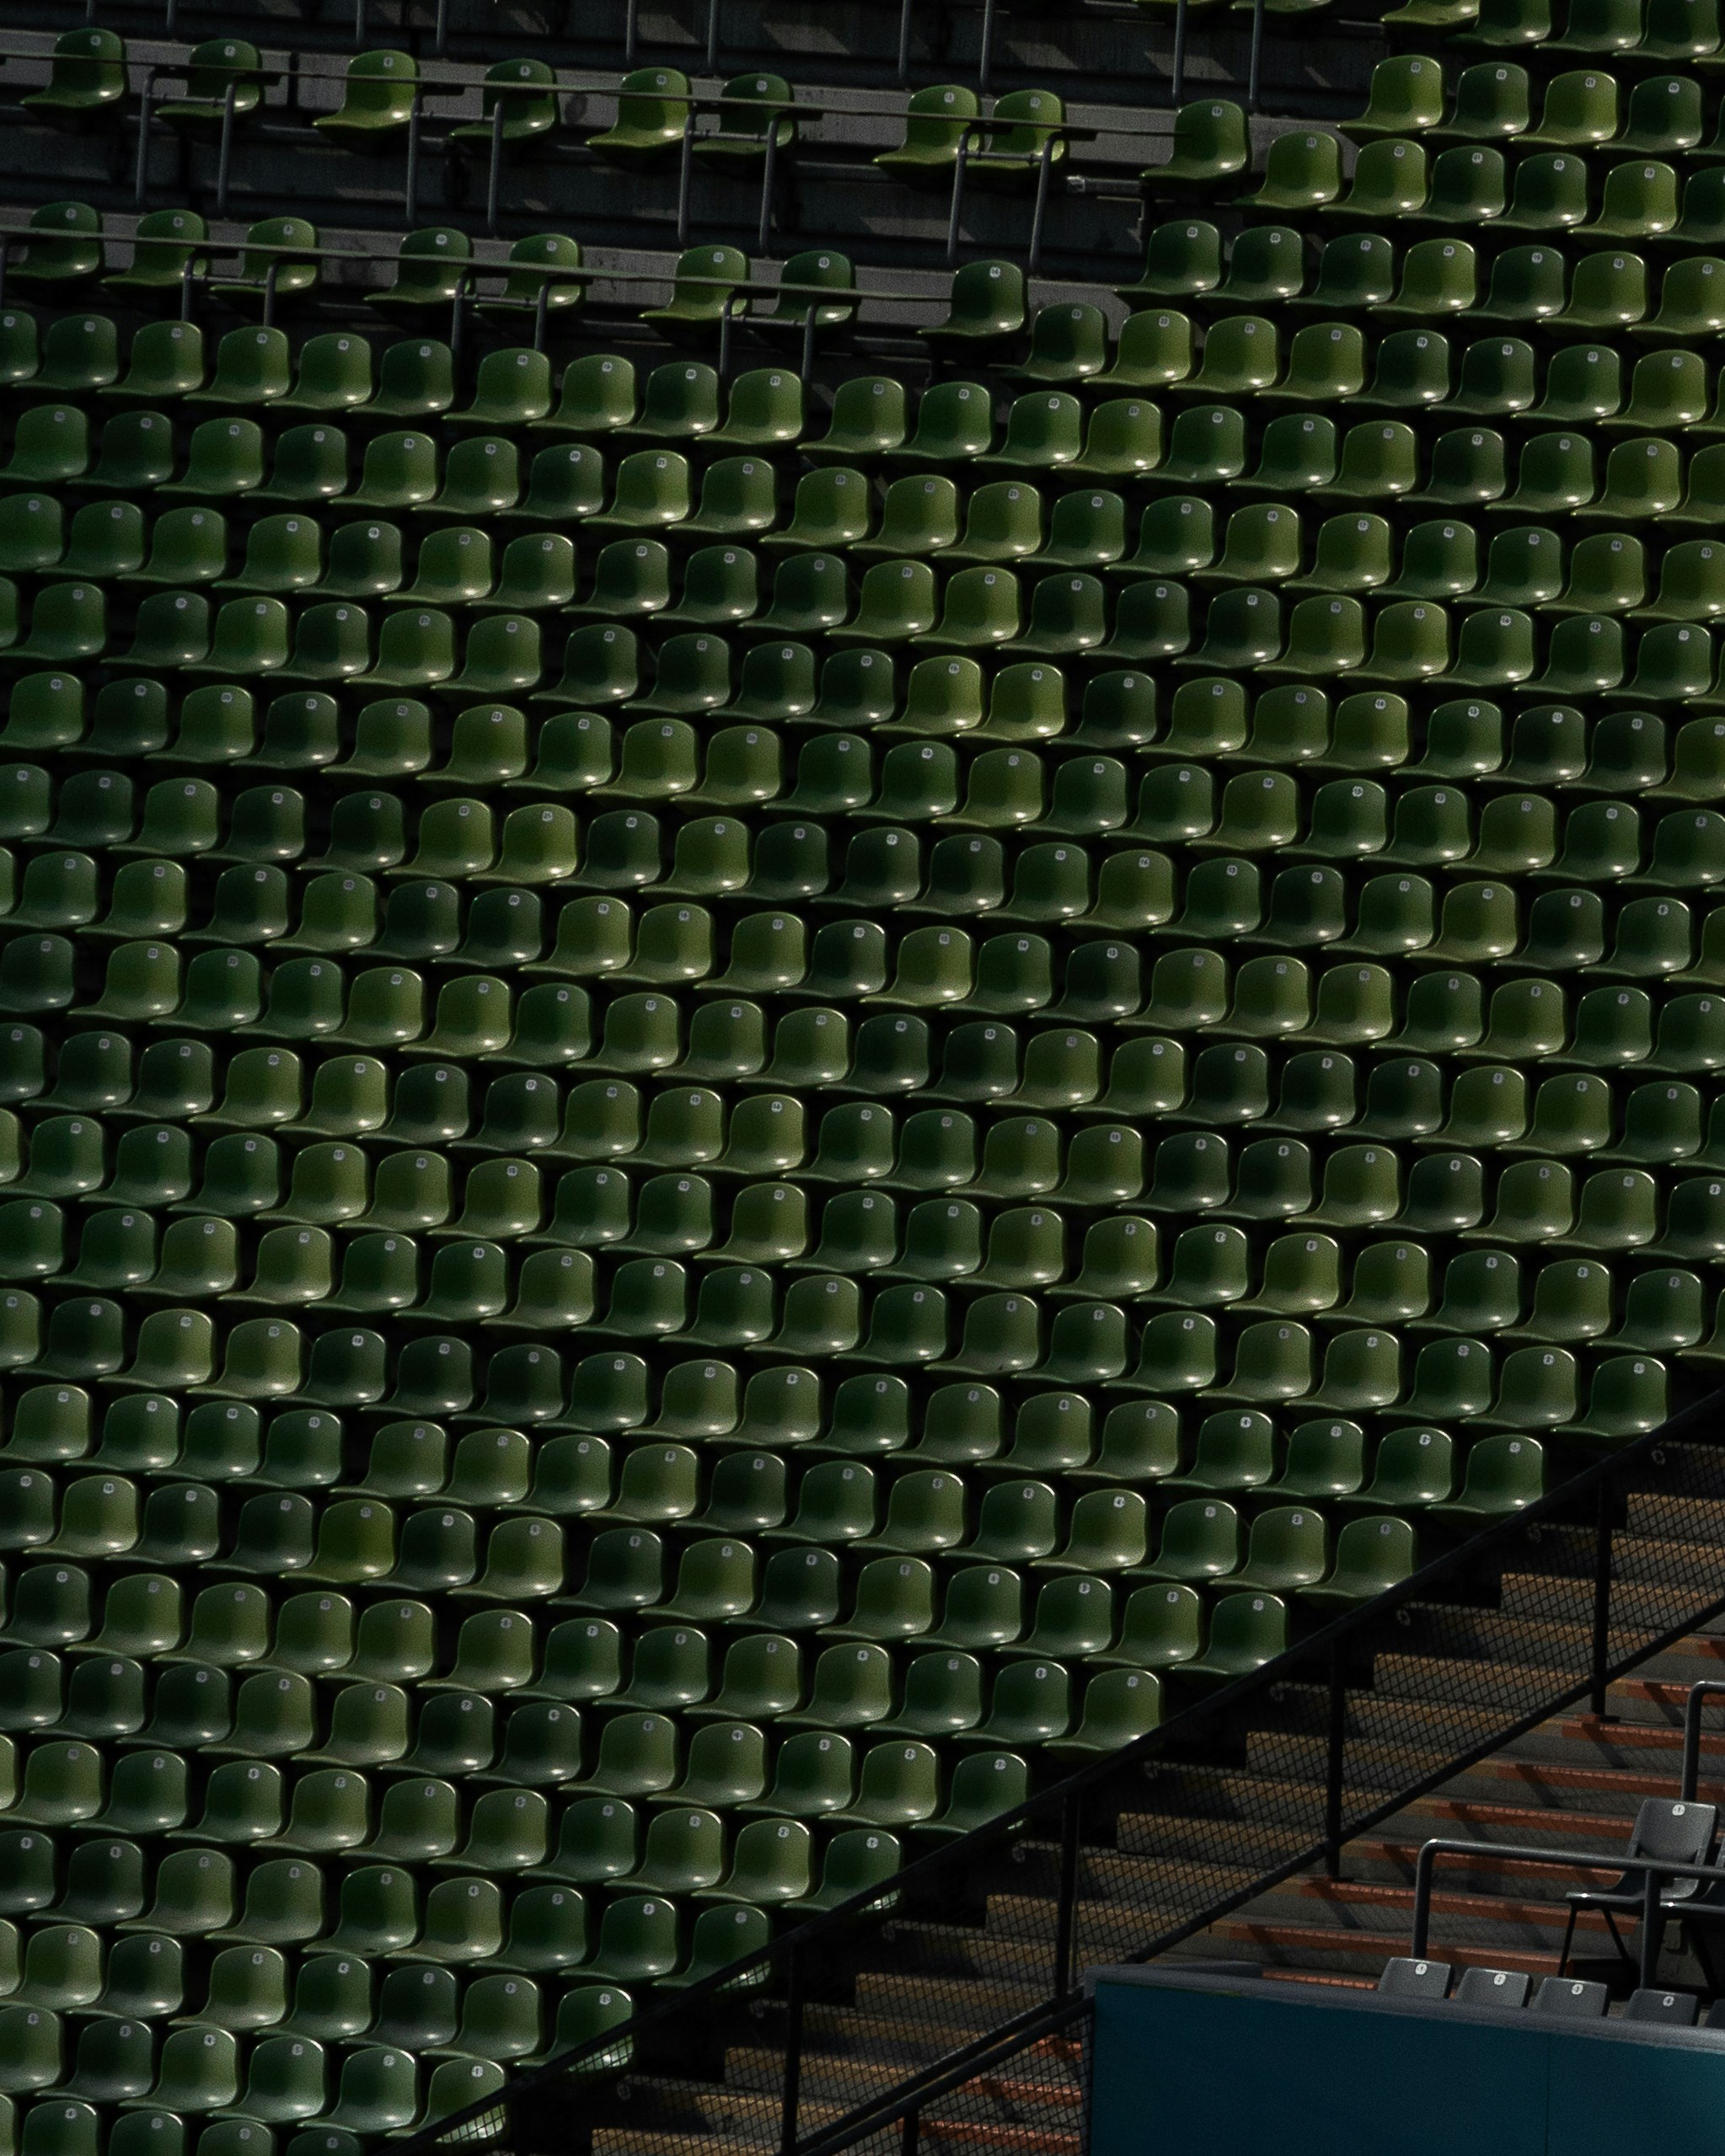 Olympic Stadium Munich seats